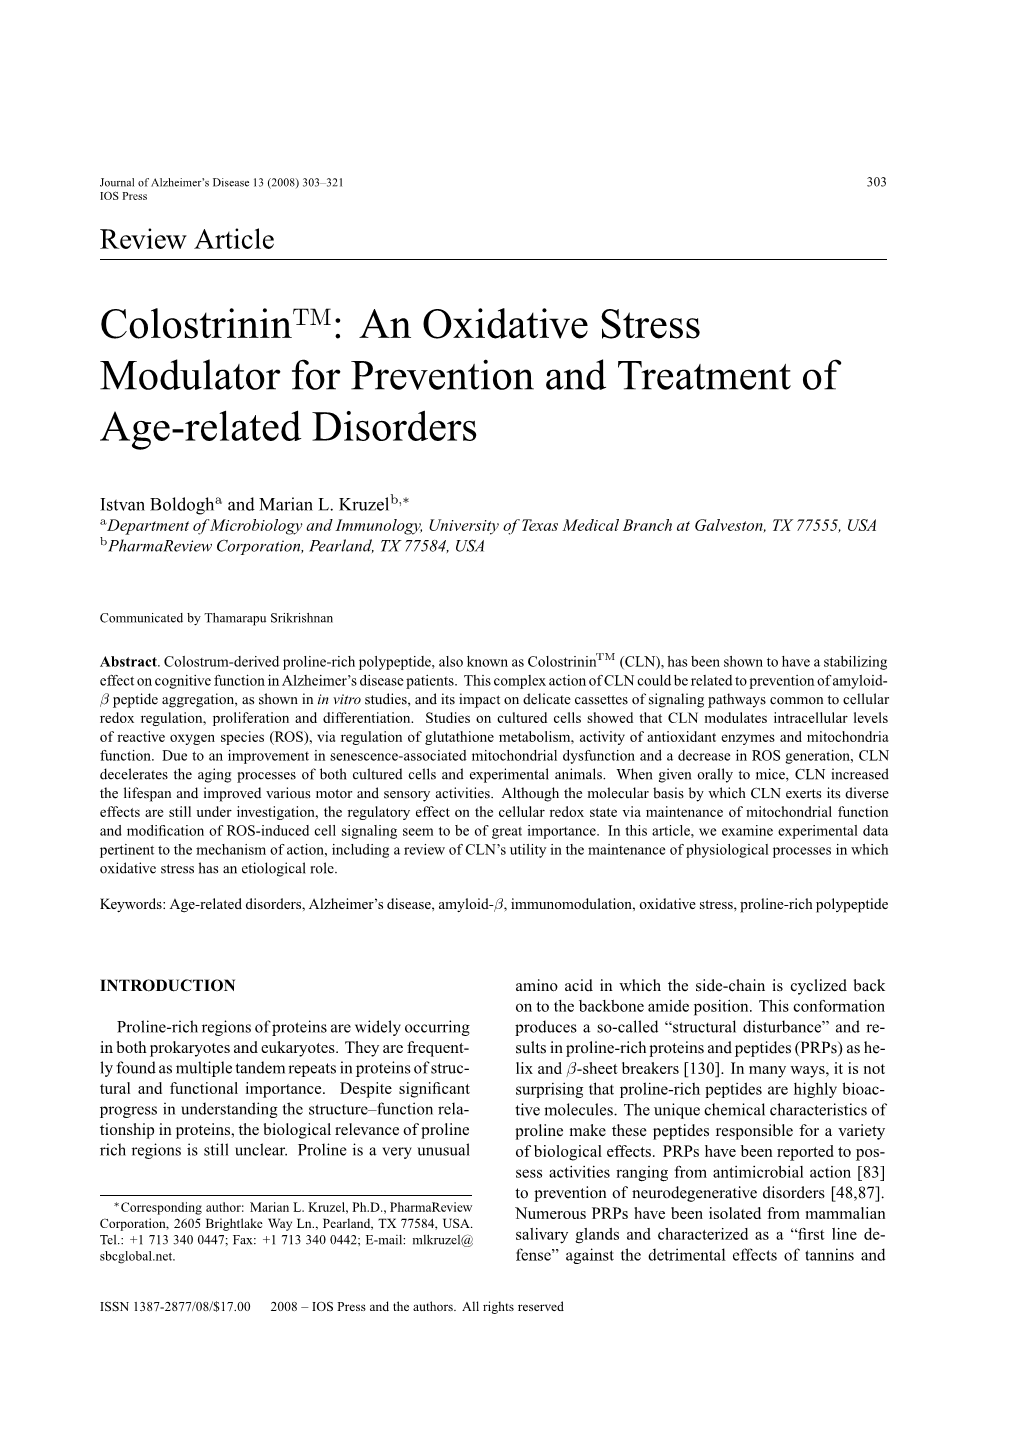 Colostrinin : an Oxidative Stress Modulator for Prevention And